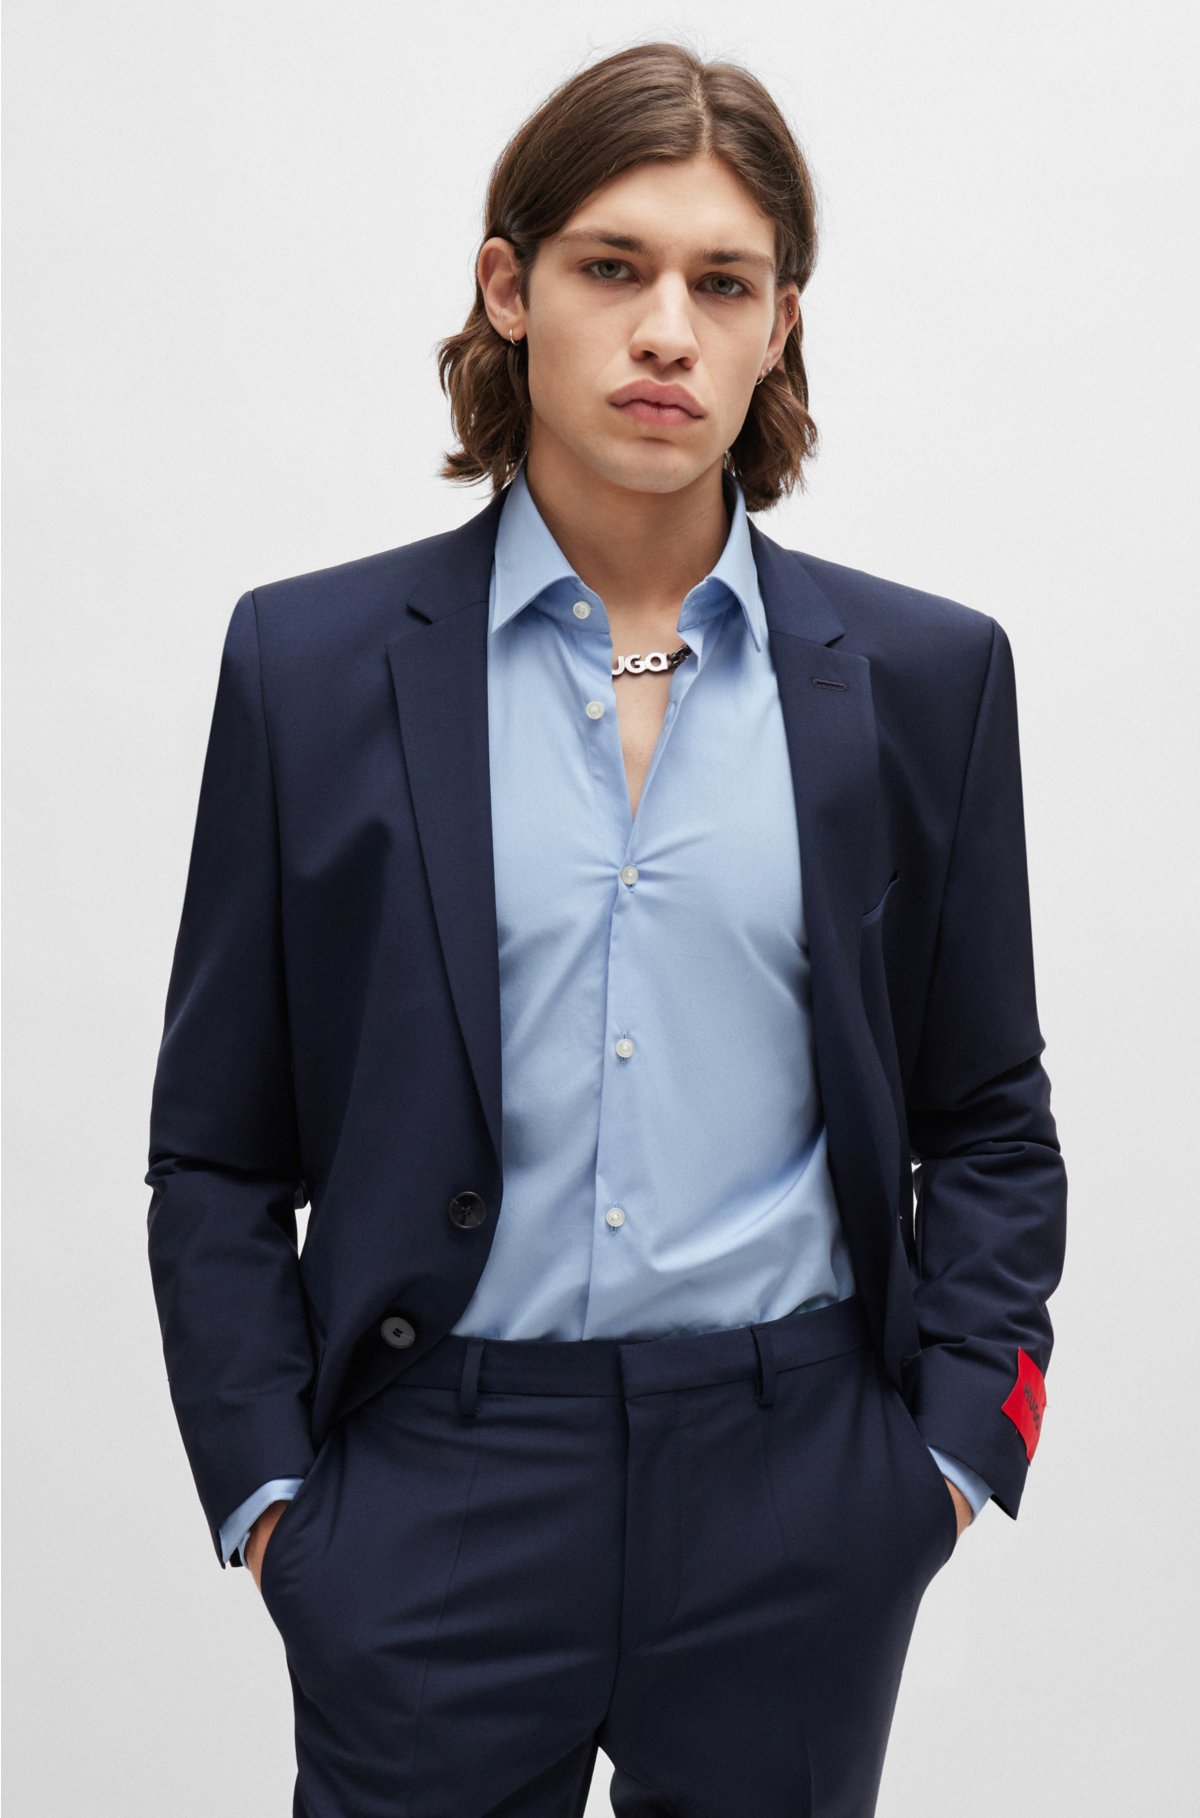 Slim-fit shirt in easy-iron cotton poplin, Light Blue